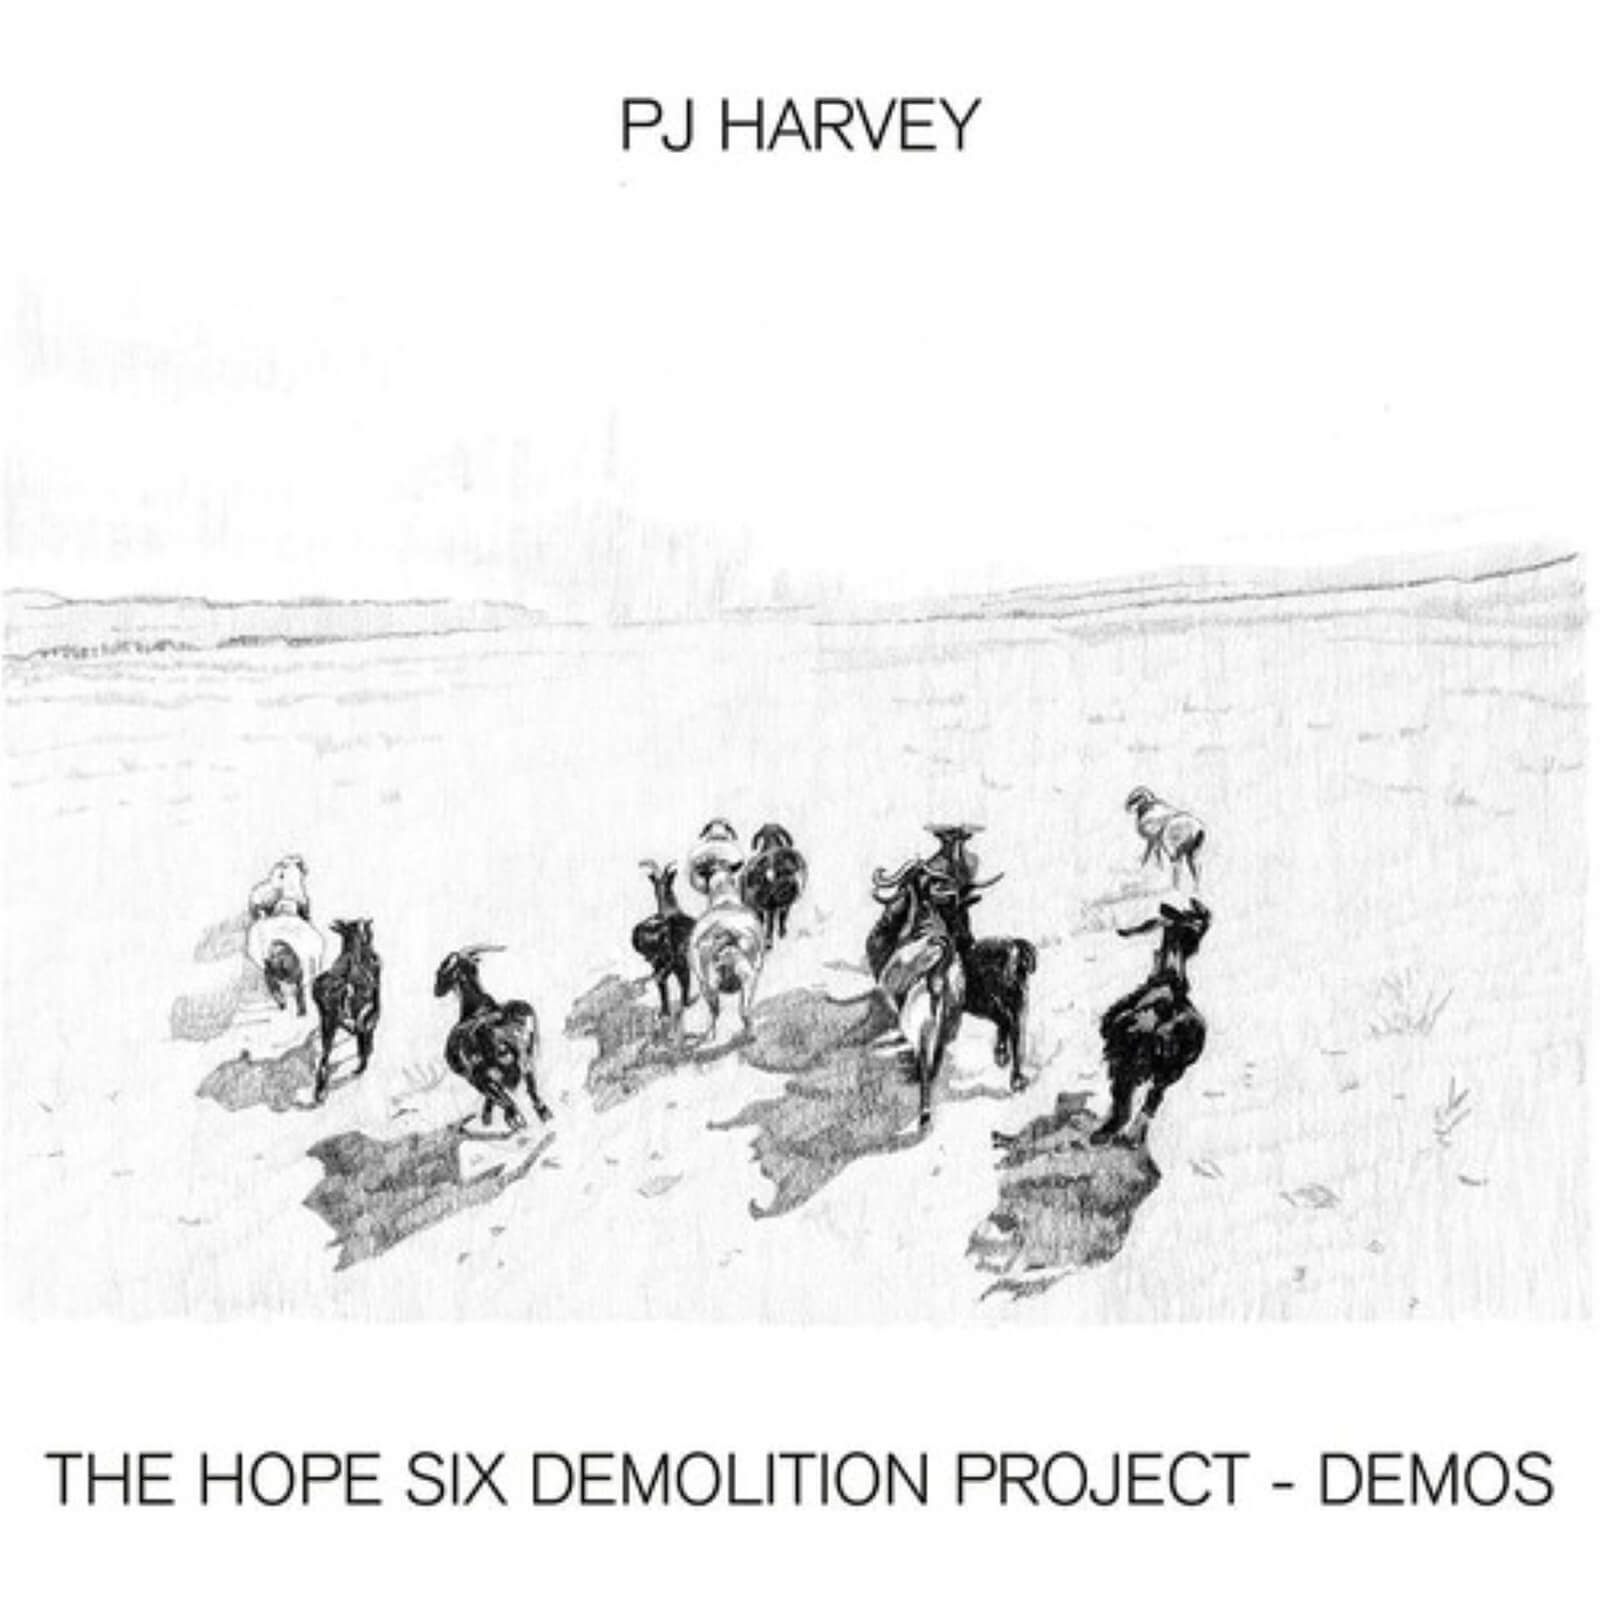 PJ Harvey - The Hope Six Demolition Project - Demos LP